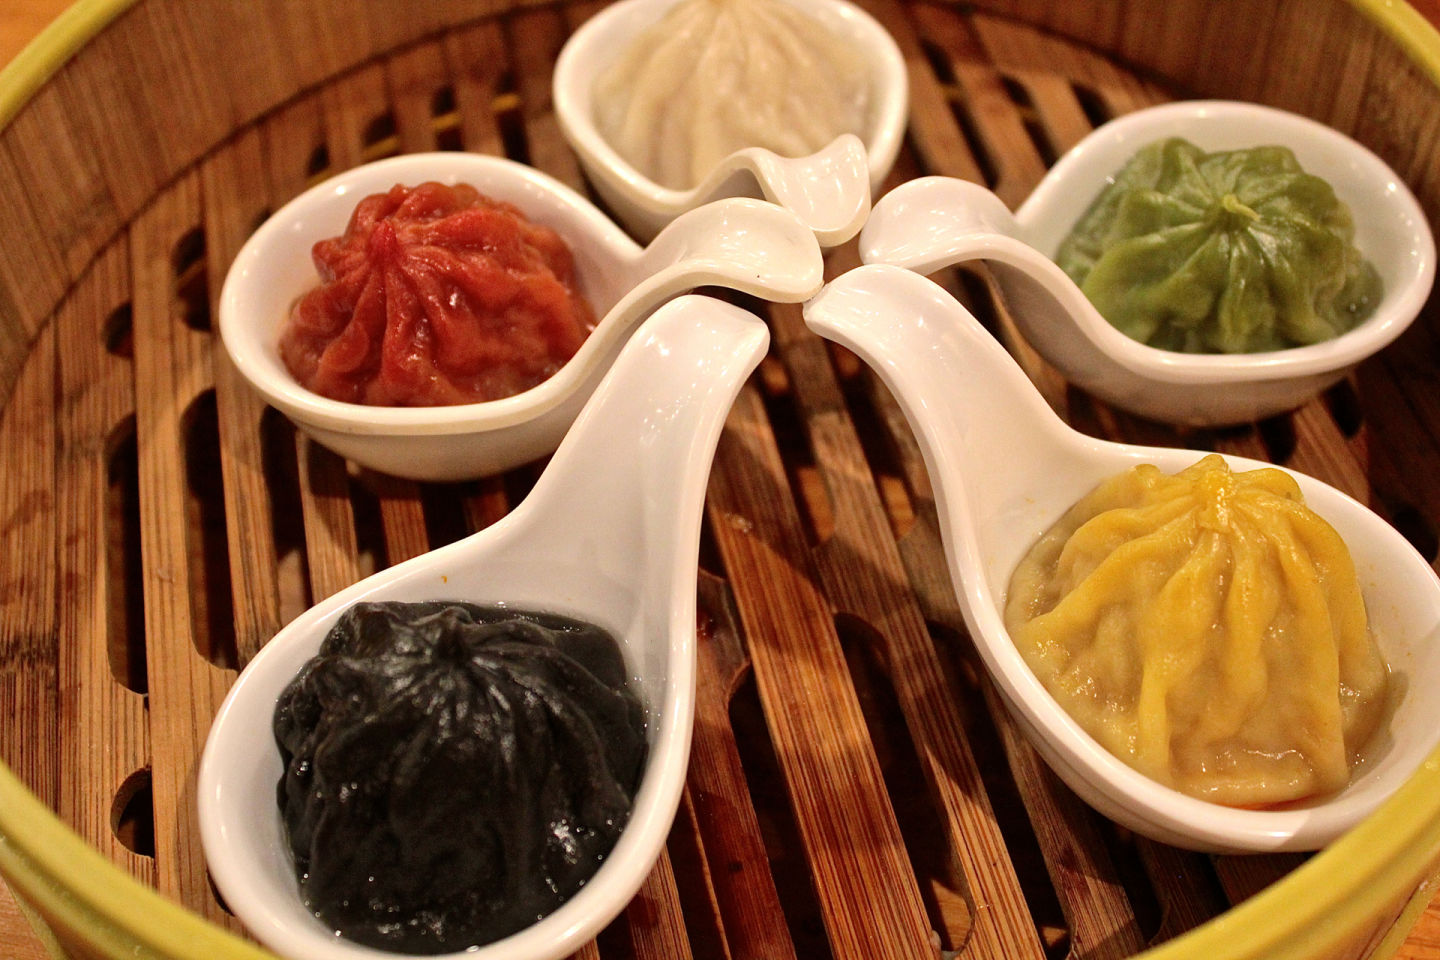 The Shanghai dumpling sampler at Koi Palace. Jeff Cianci